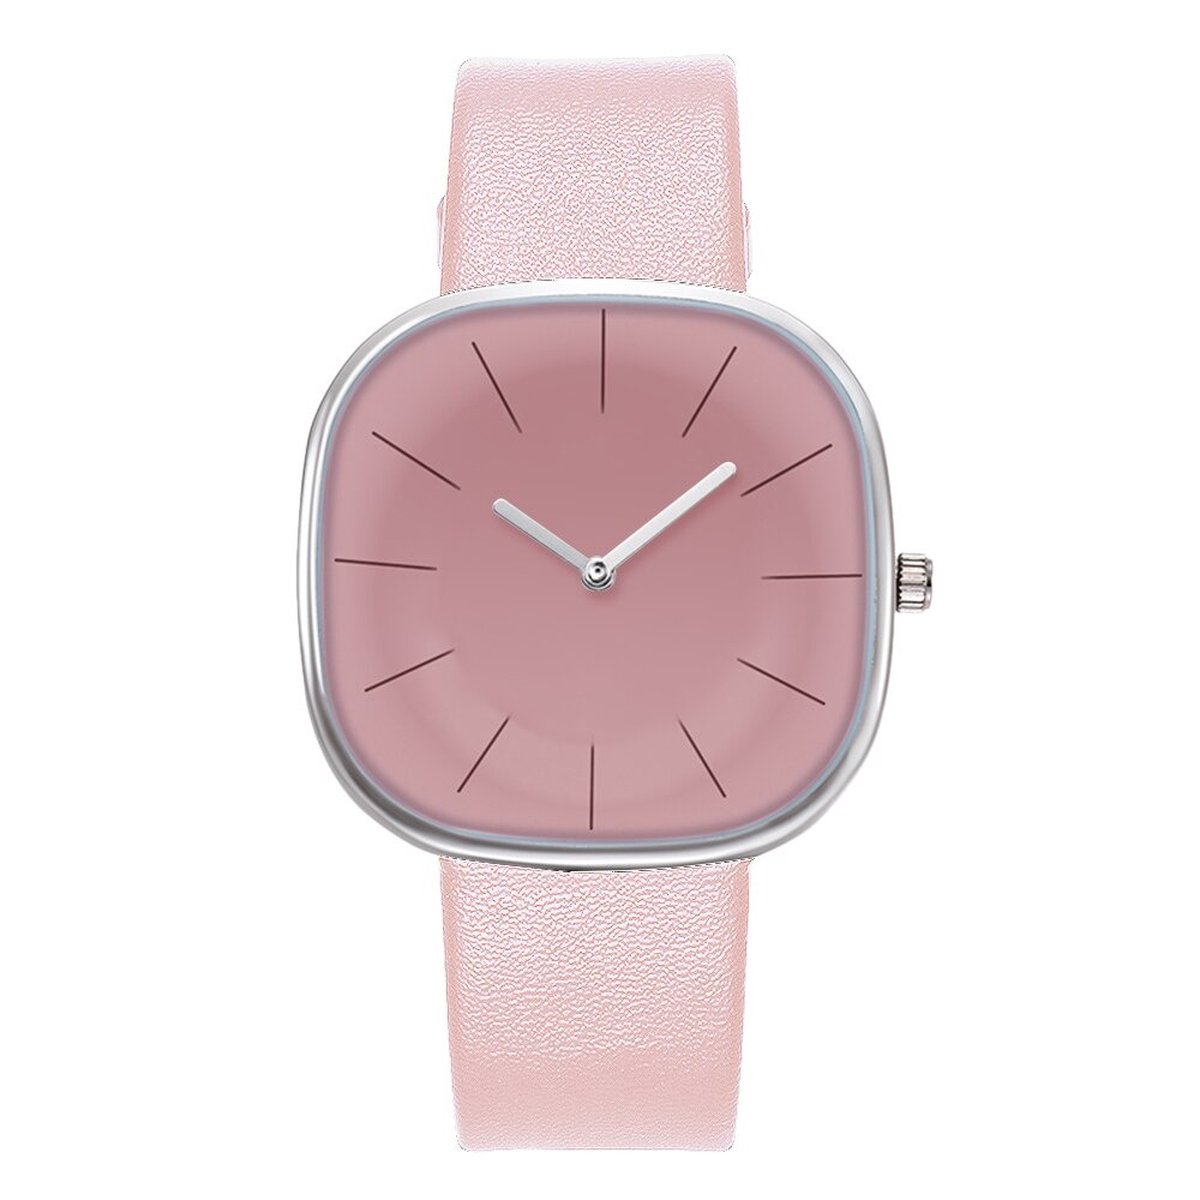 WiseGoods WS670 Minimalisme Design Dames Horloge - Horloges Vrouw - Sieraden - Accessoires Kleding - Cadeau Meisje - Sieraad Roze